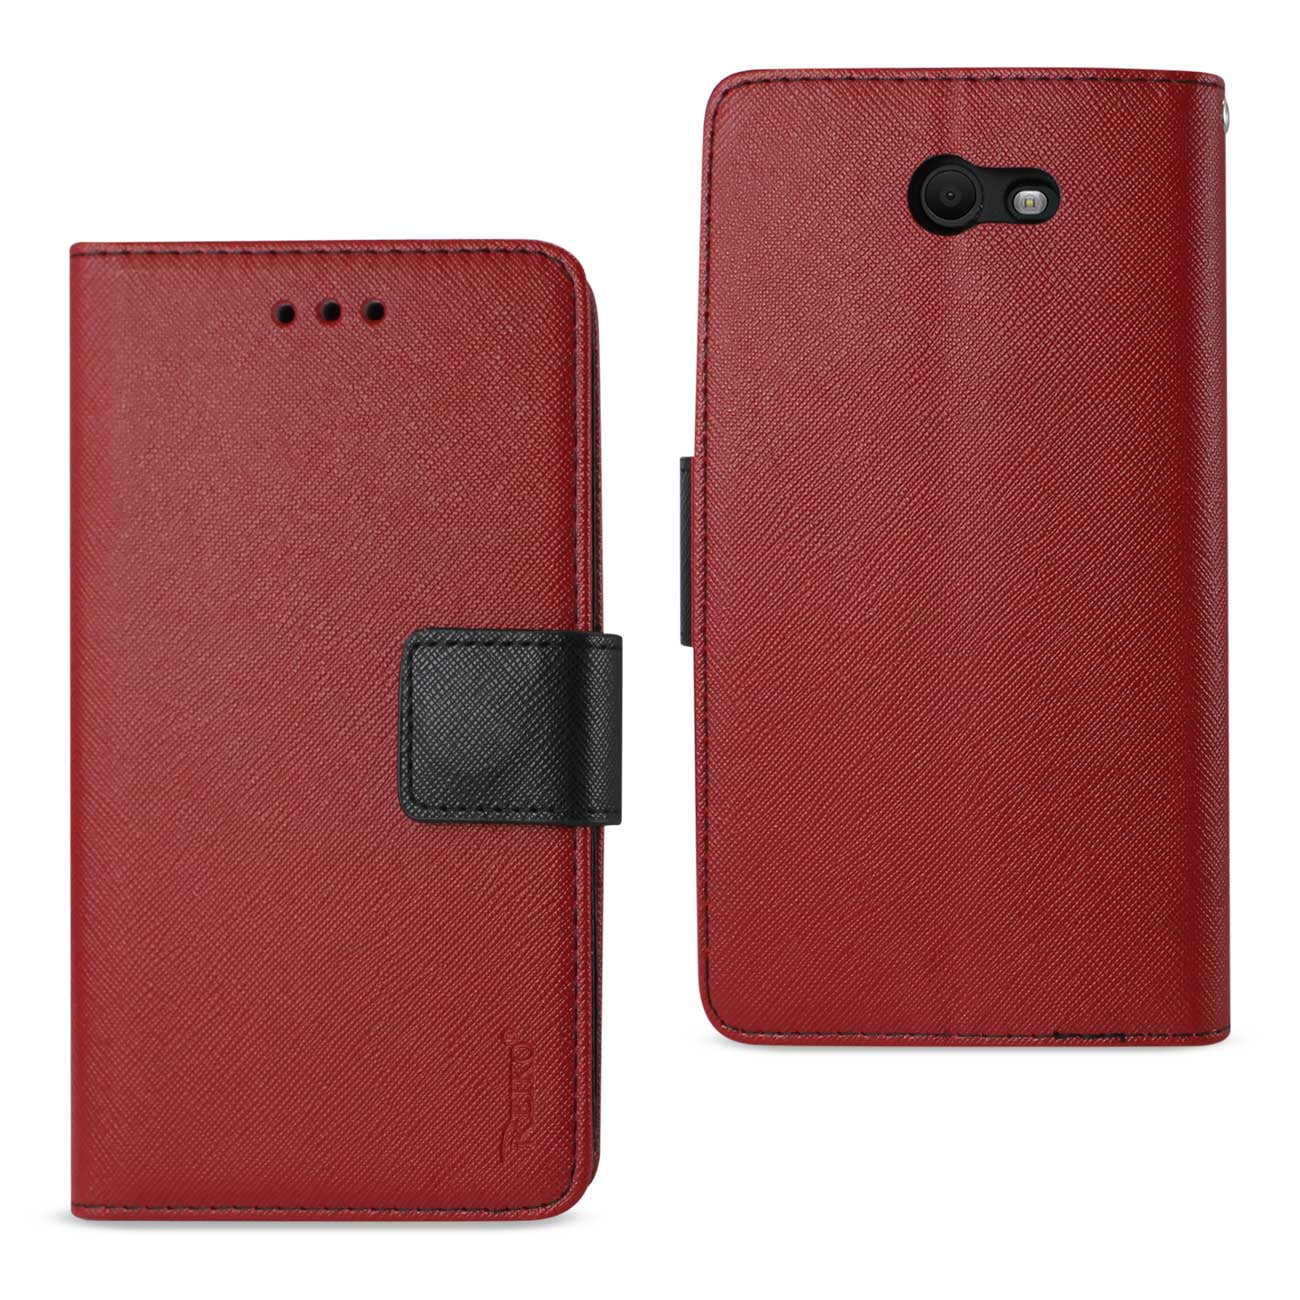 Samsung Galaxy J7 V (2017) 3-in-1 Wallet Case In Red - Walmart.com